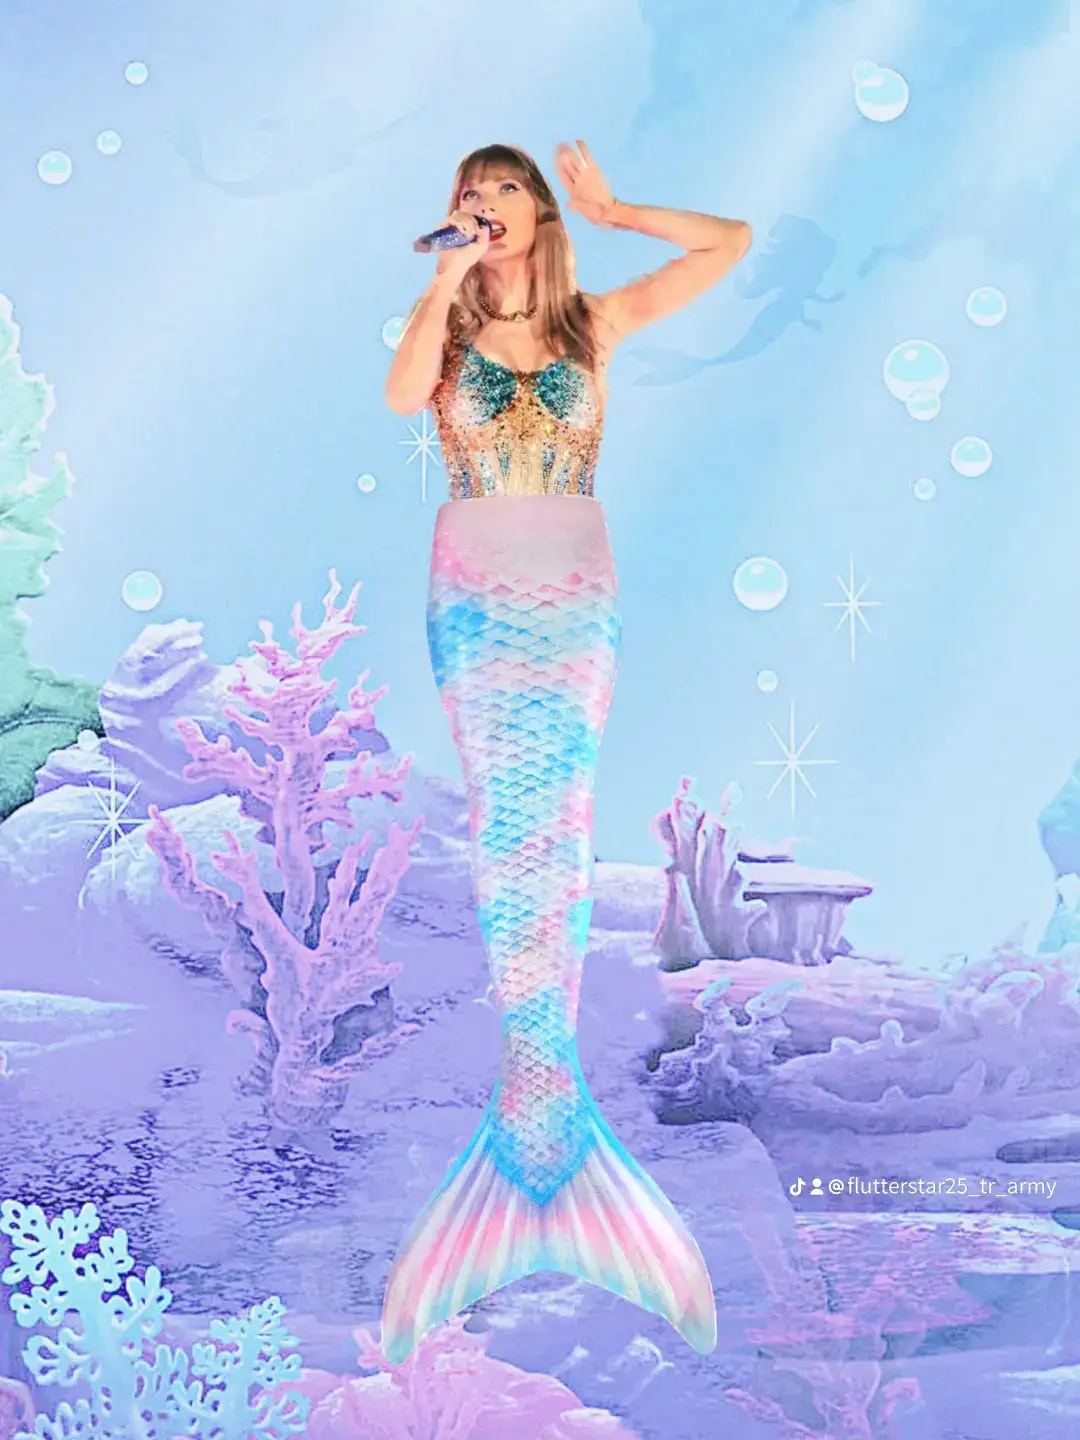 taylor swift as a mermaid